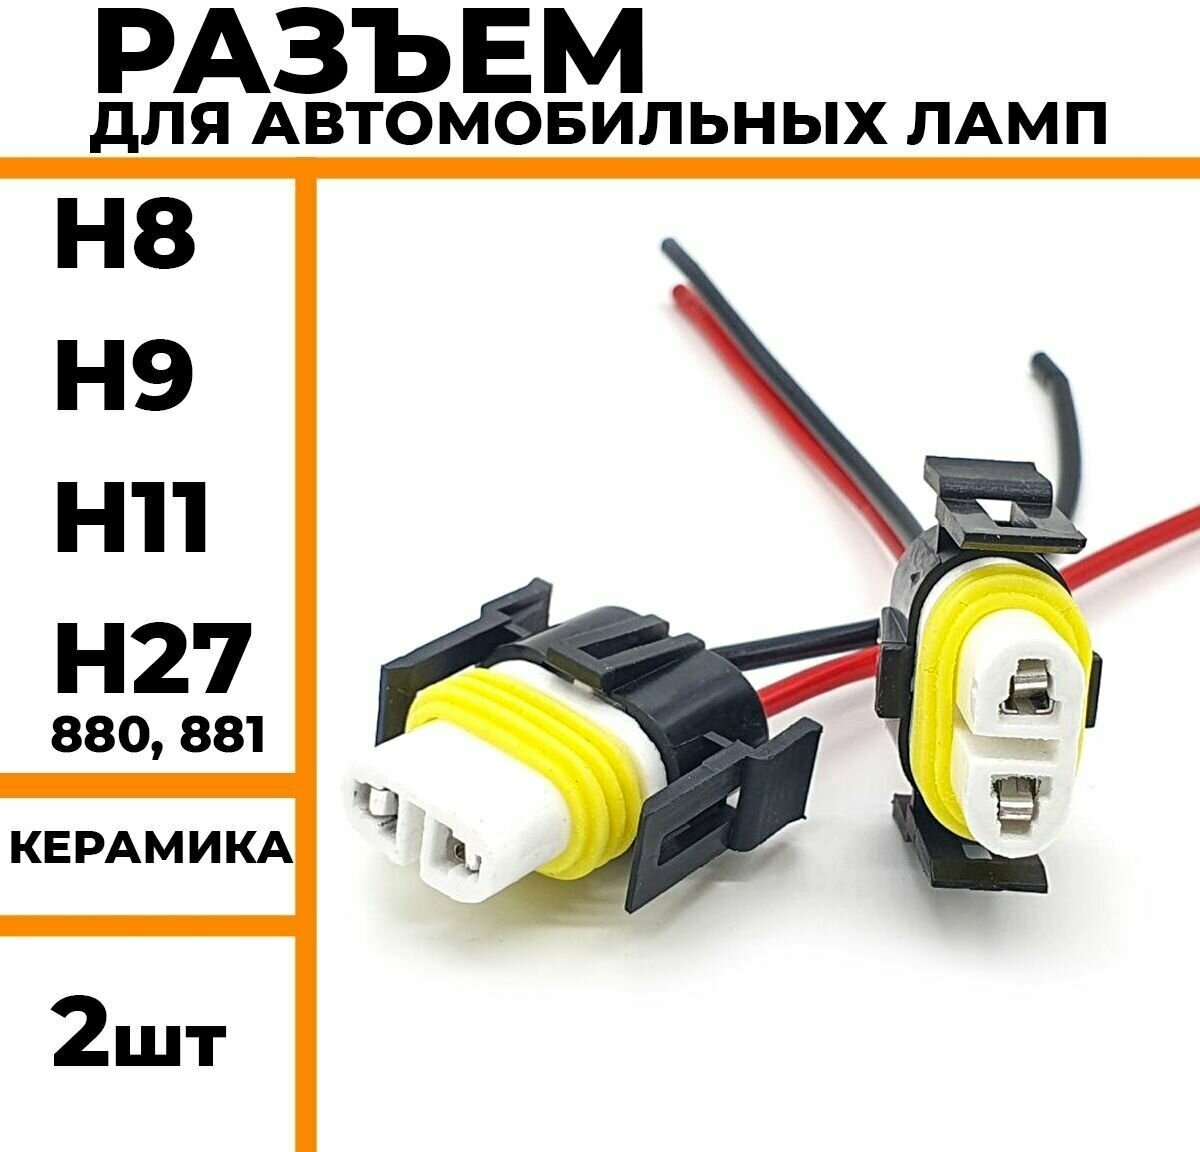 Разъем для автомобильных ламп с цоколем H8 H9 H11 H27 патрон для подключения автомобильных ламп керамика 2 шт